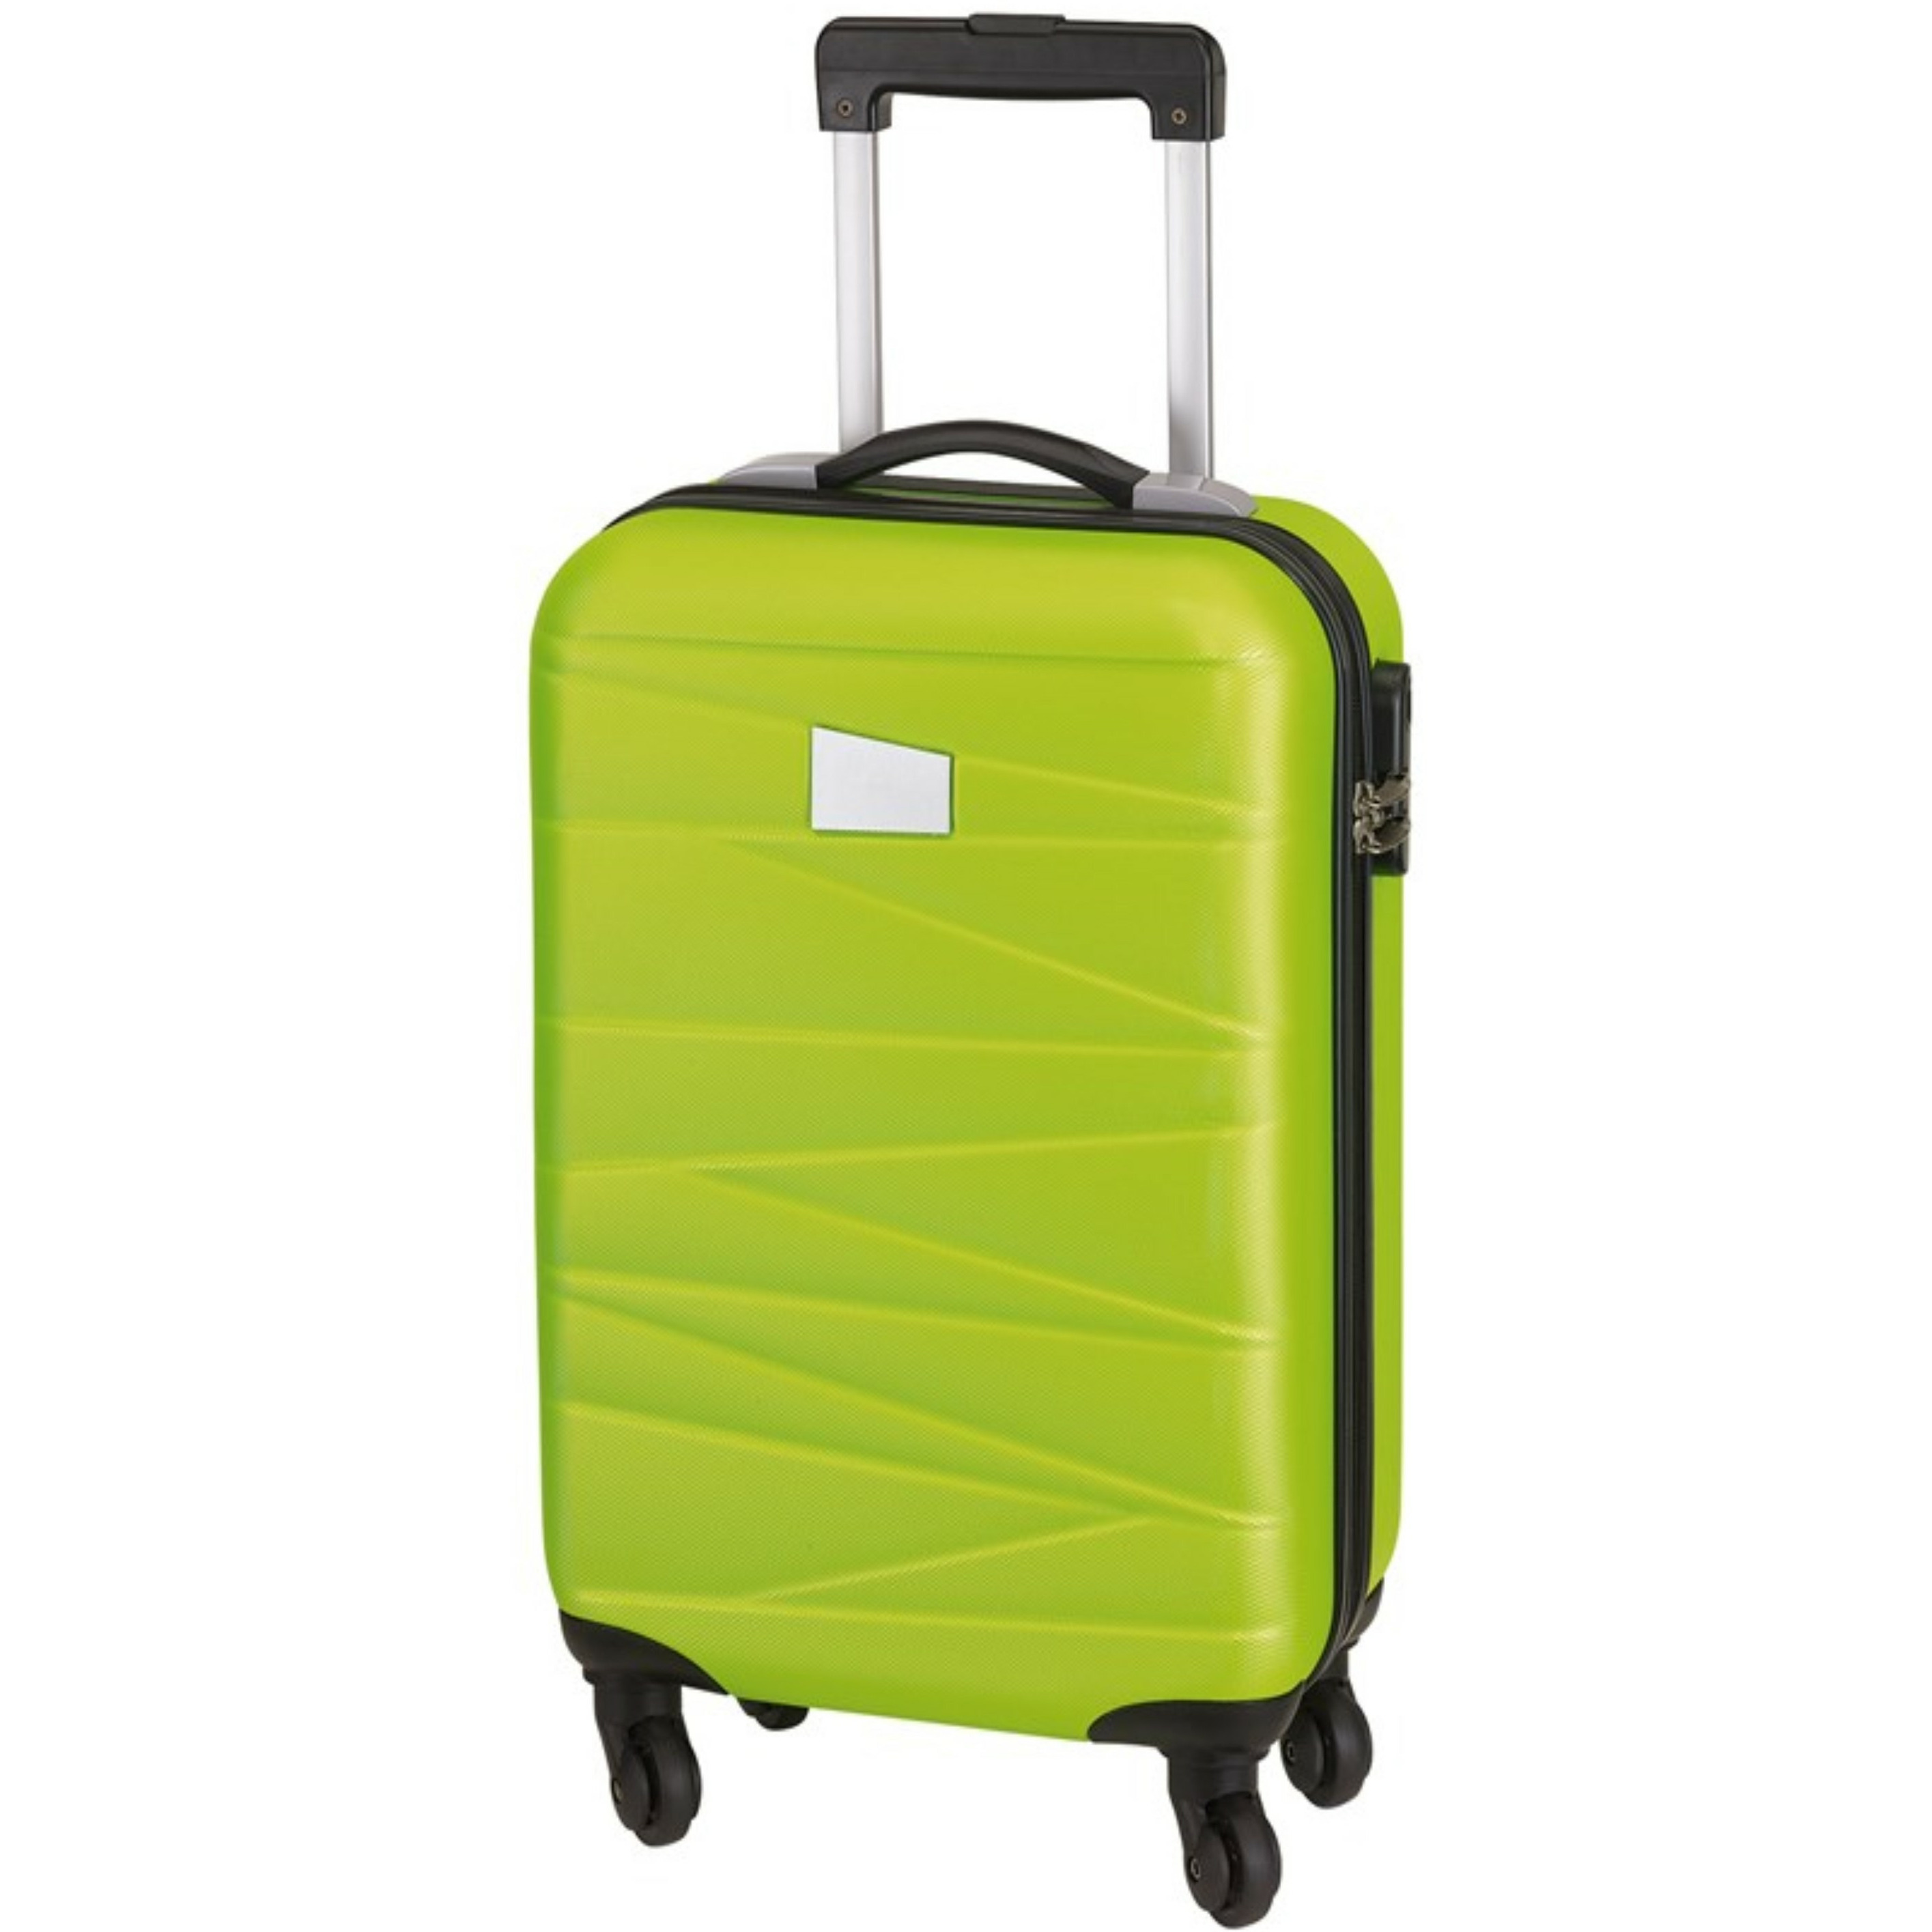 Cabine handbagage reis trolley koffer met zwenkwielen 55 x 35 x 20 cm limegroen